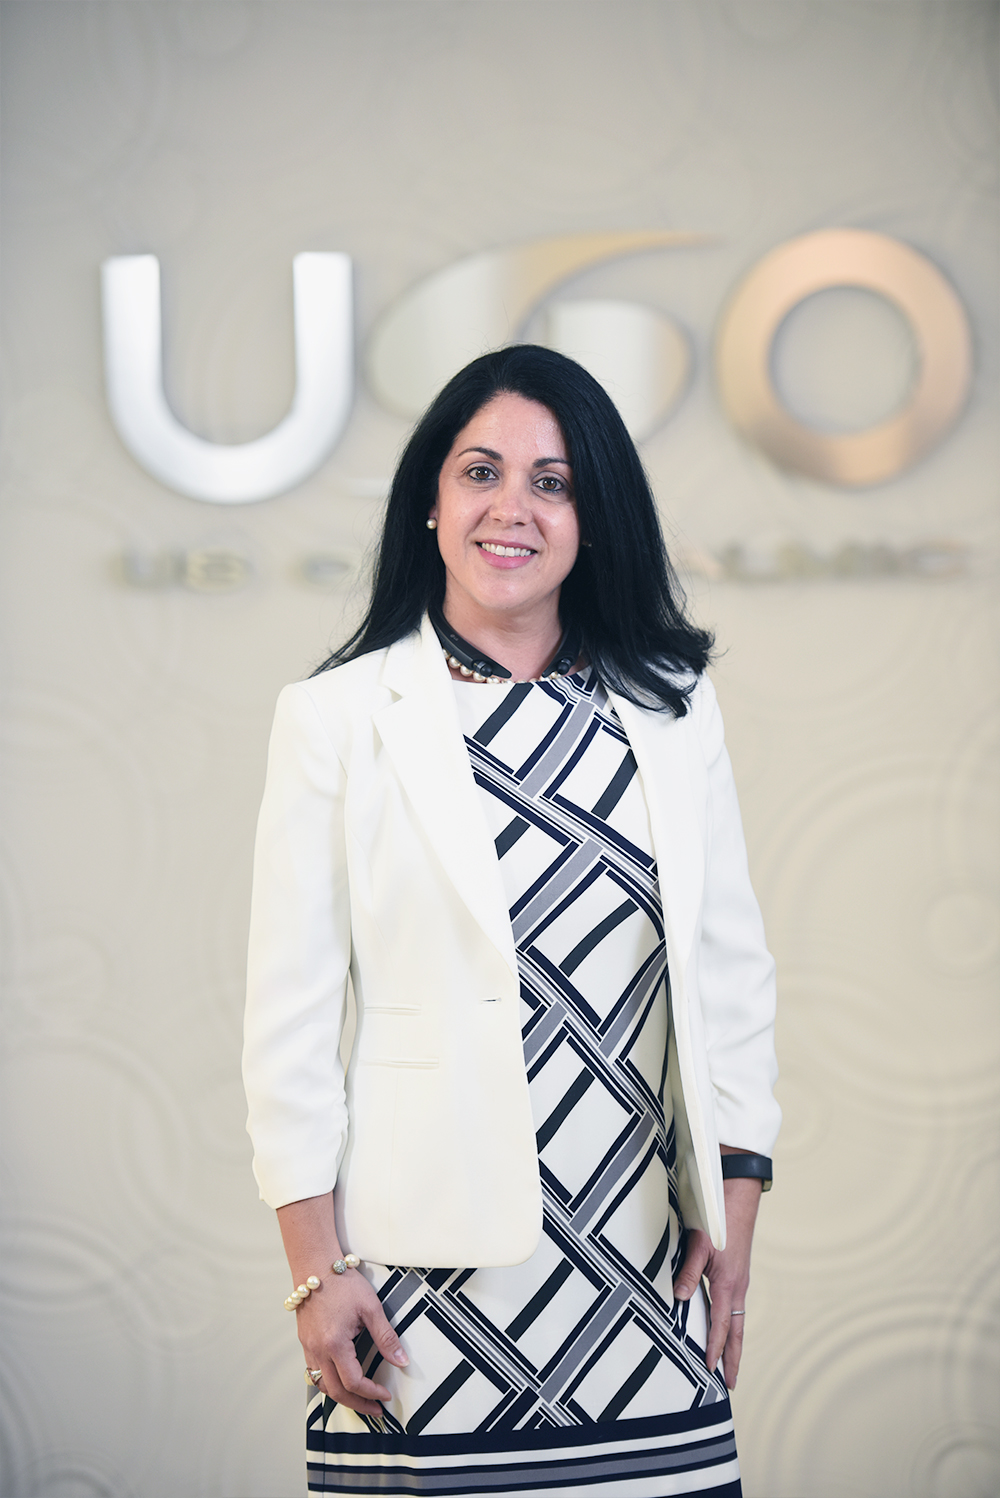 Lisa Enriquez Customer Relations